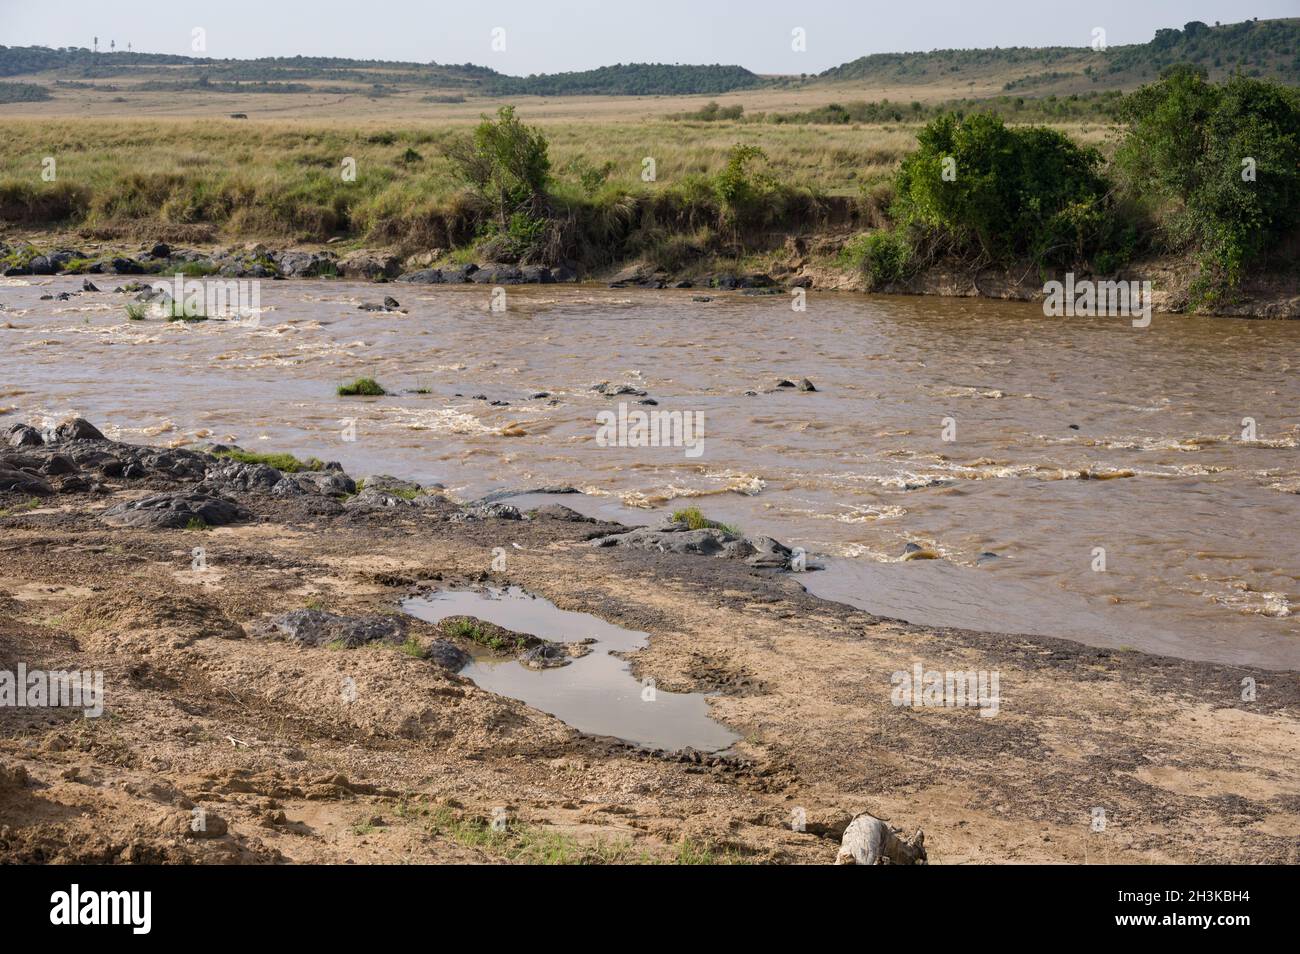 View of the Mara river flowing through the open grassland of the Masai Mara, Kenya Stock Photo